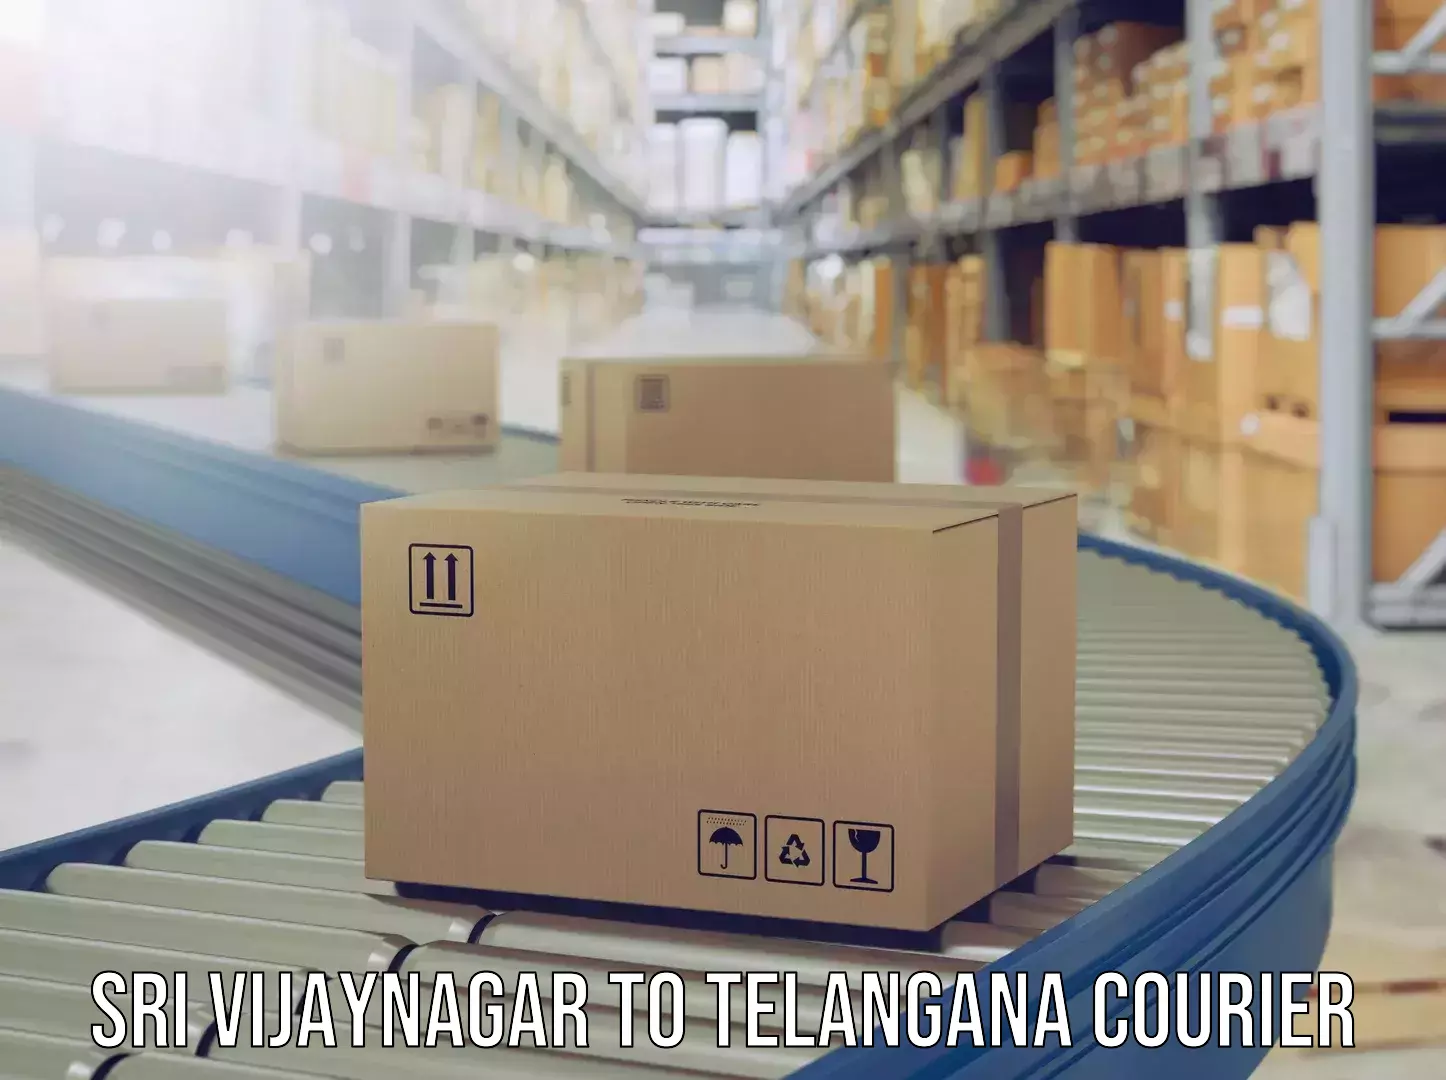 Luggage shipment specialists Sri Vijaynagar to Telangana